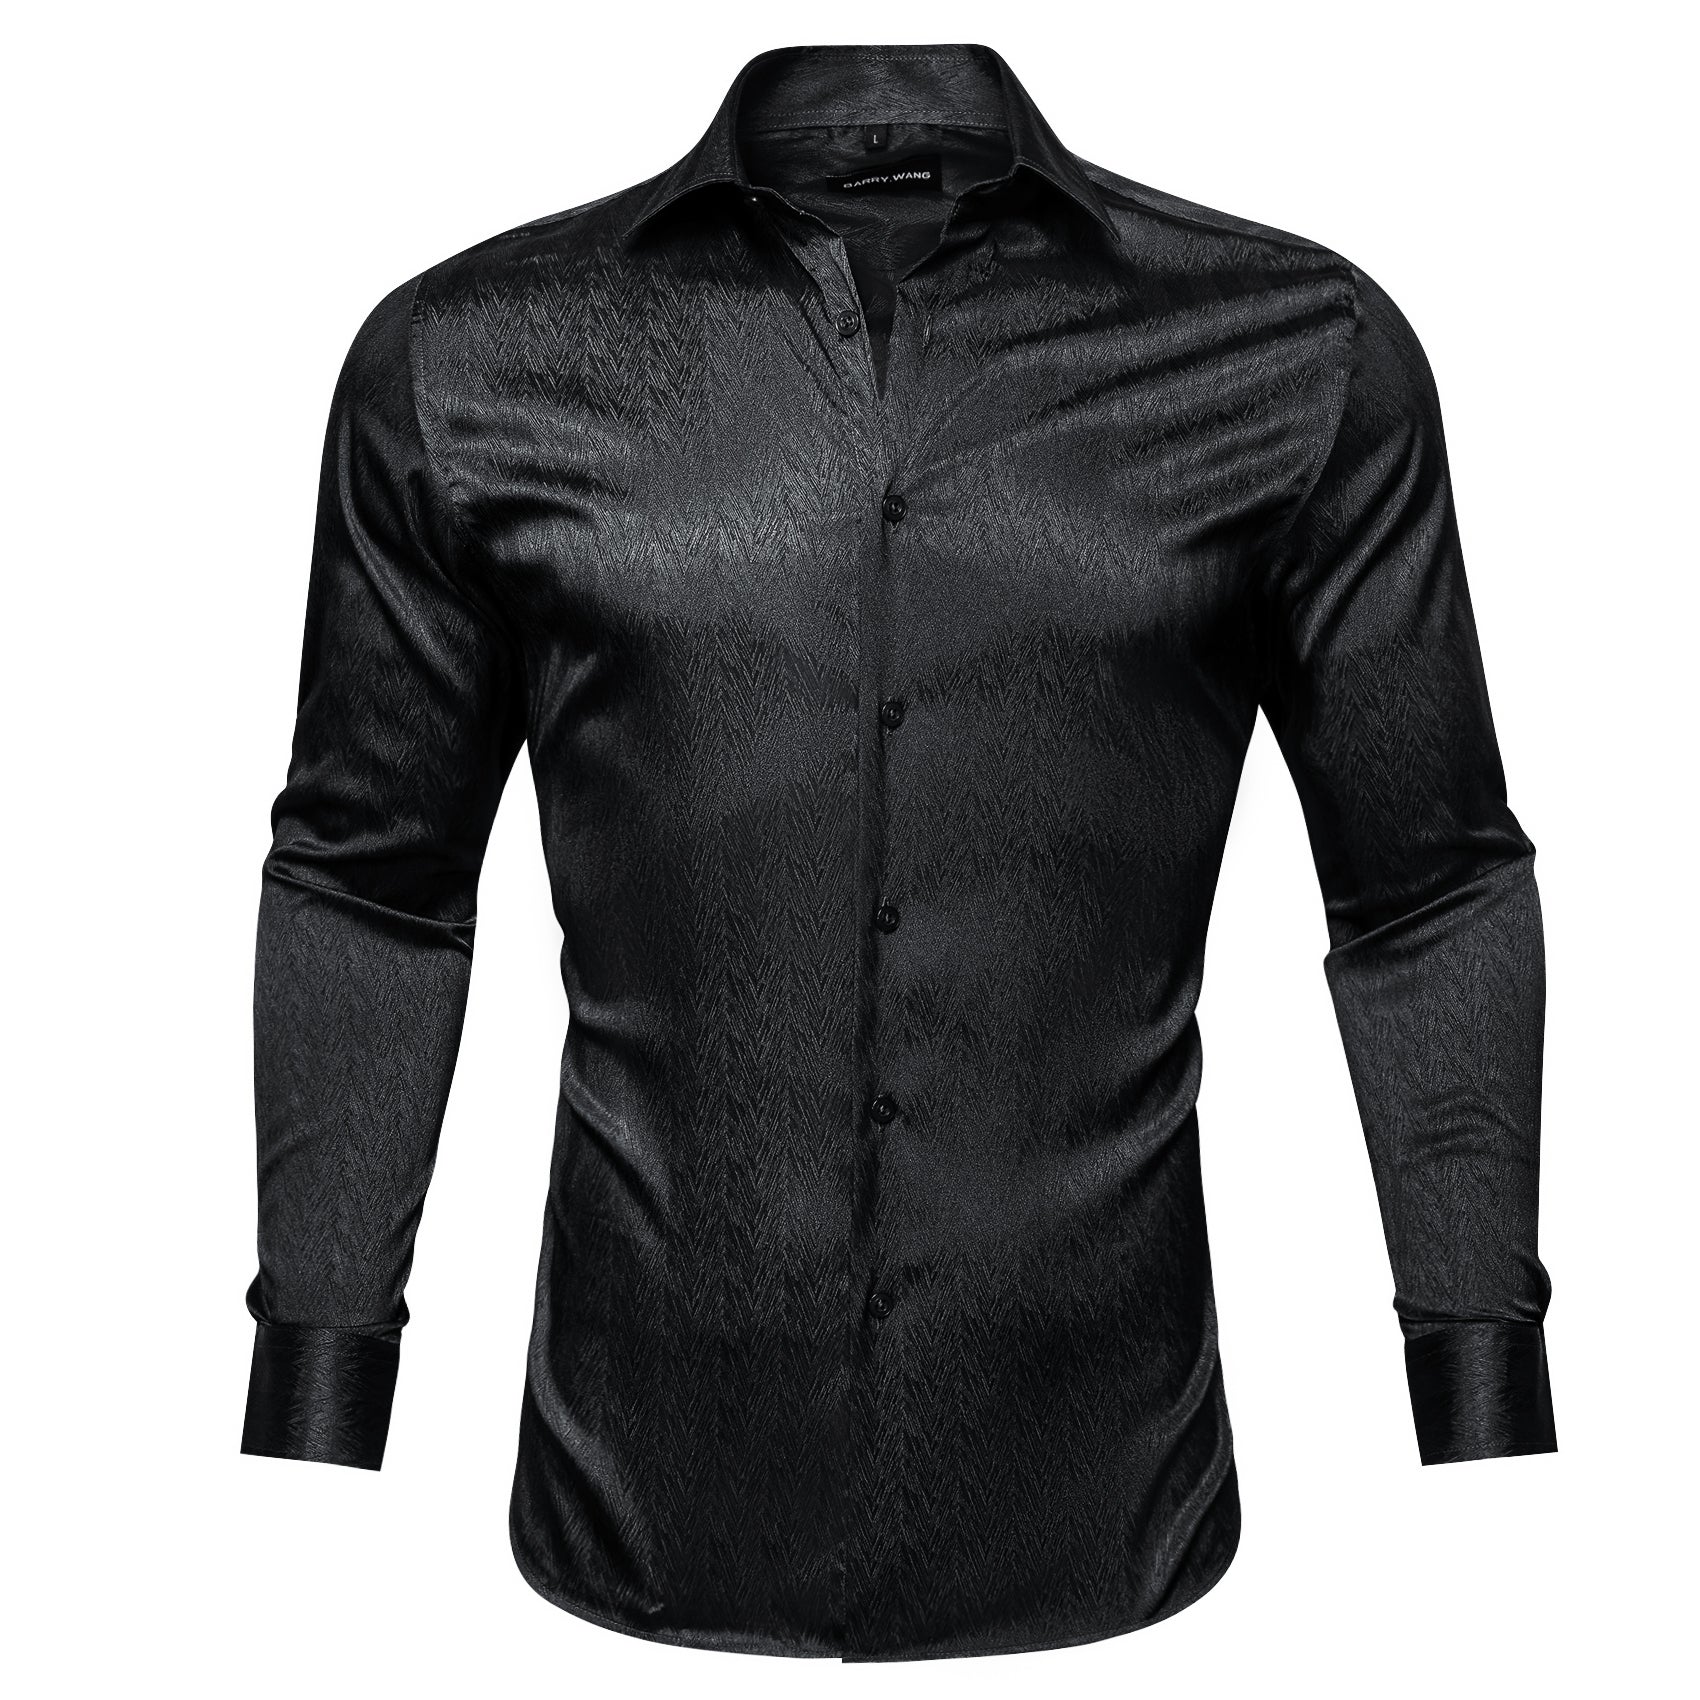 Barry.wang Classy Black Solid Silk Shirt